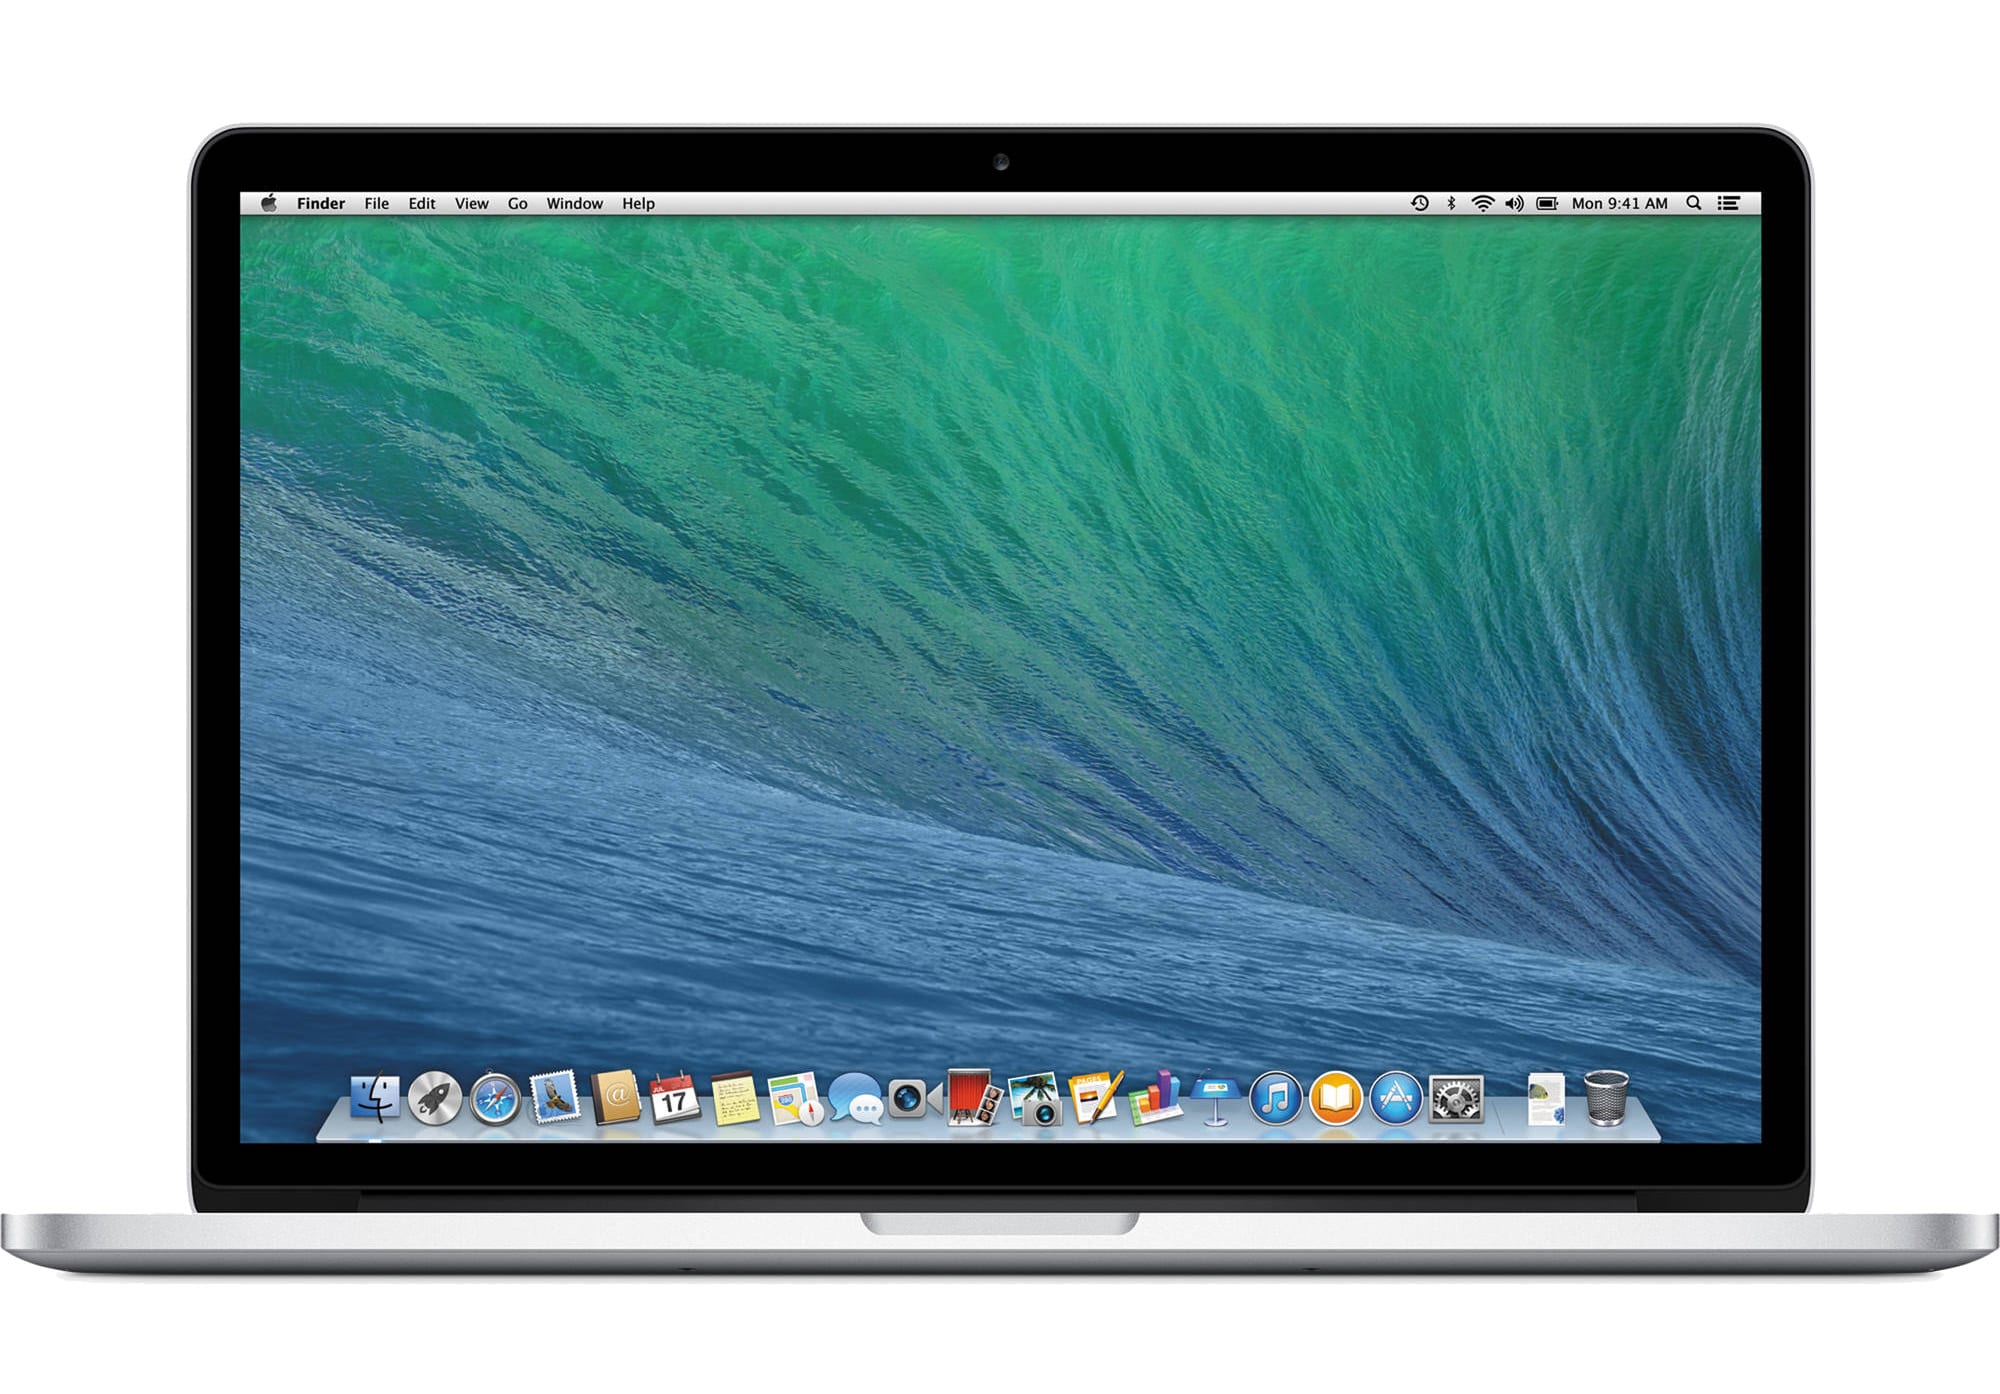 Apple MacBook Pro 15" Late 2013 Specs